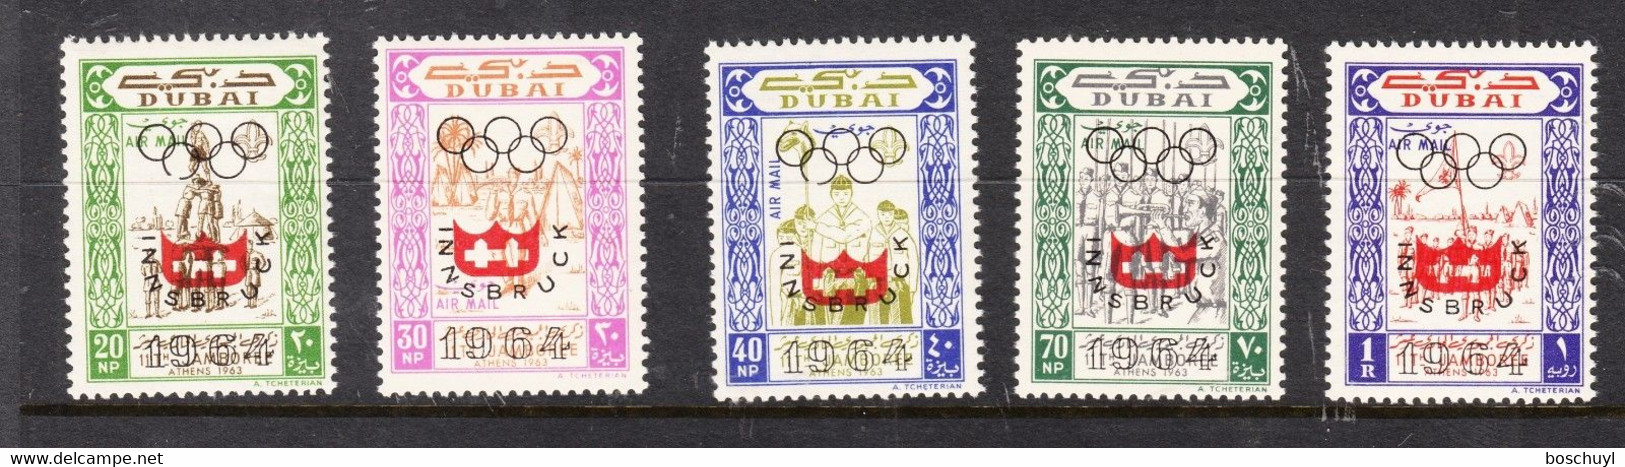 Dubai, 1964, Olympic Winter Games Innsbruck, Scouting, Jamboree, Perforated, MNH, Michel 79-83A - Dubai